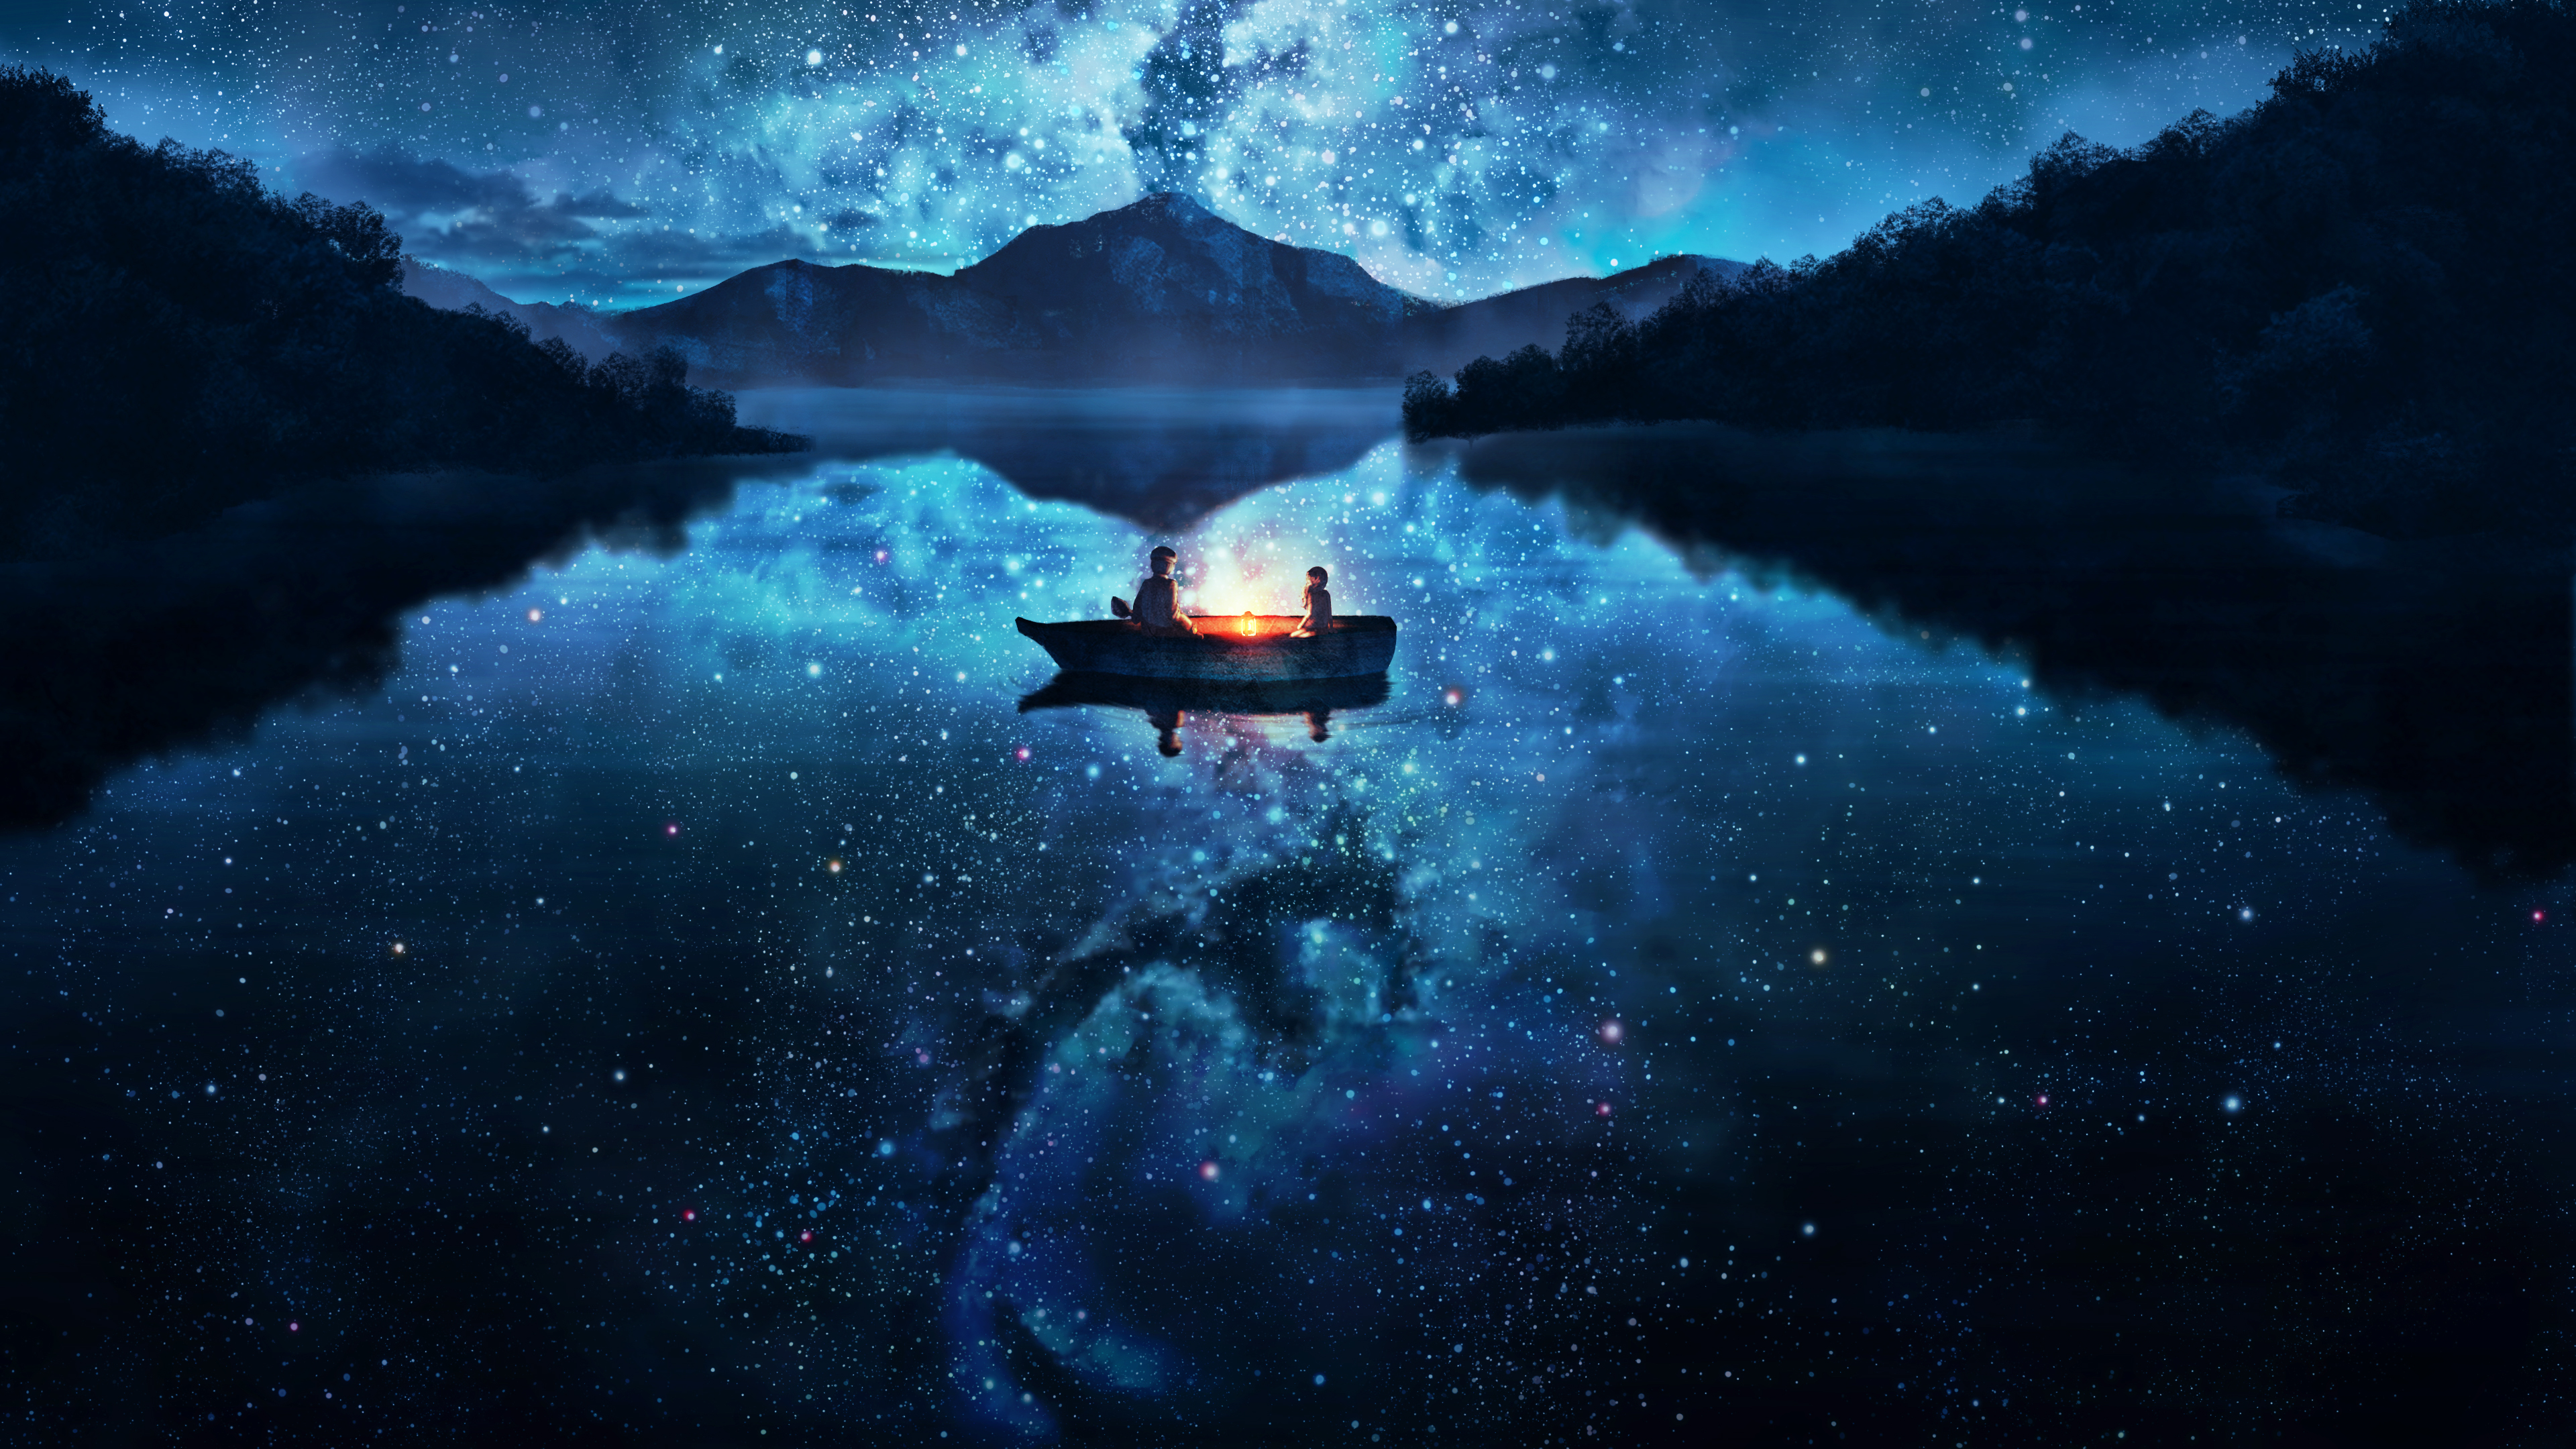 anime, lake, reflection, night, starry sky, boat, scenic